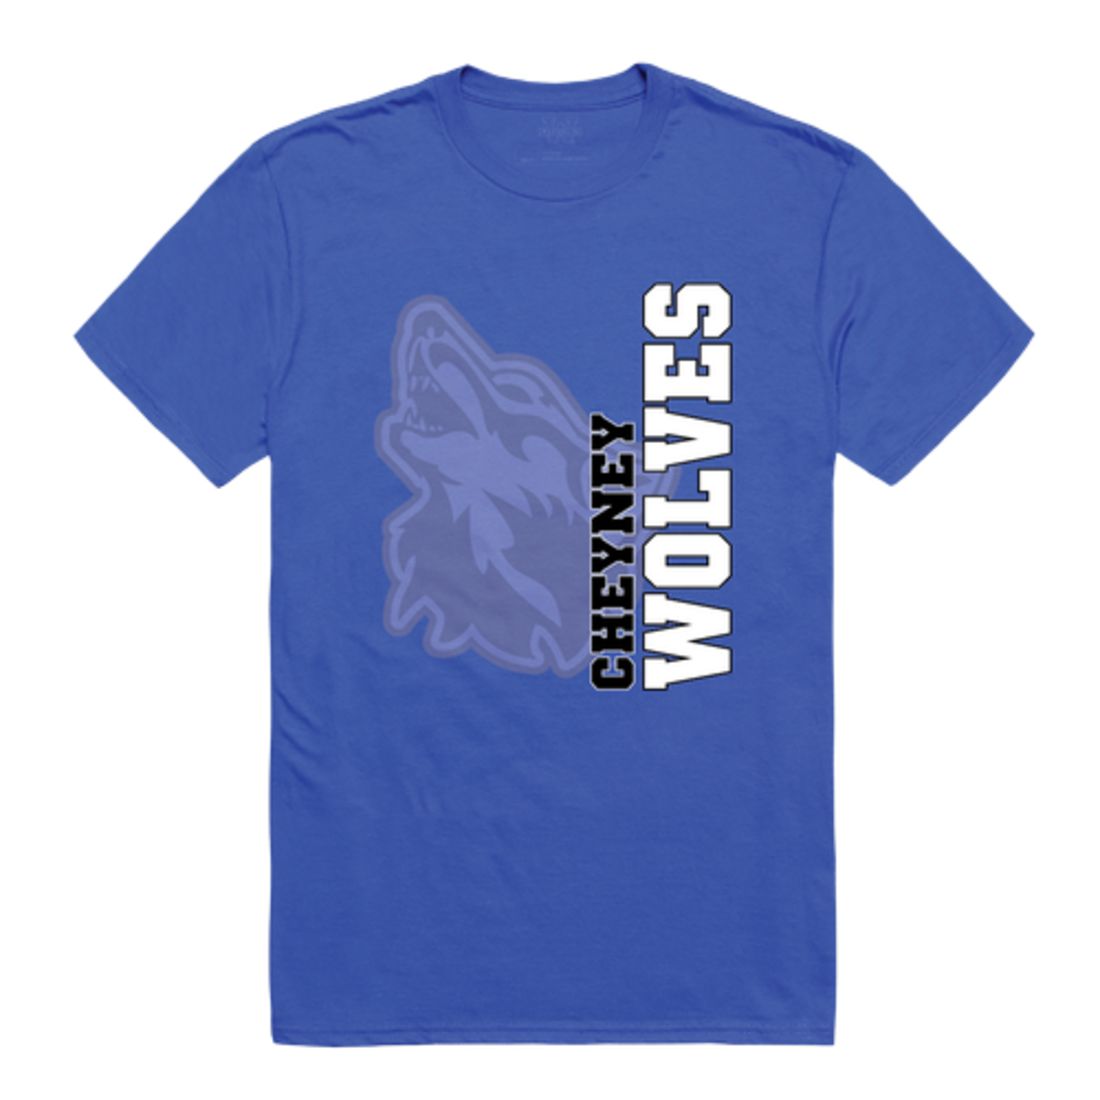 Cheyney University of Pennsylvania Wolves Ghost T-Shirt Tee